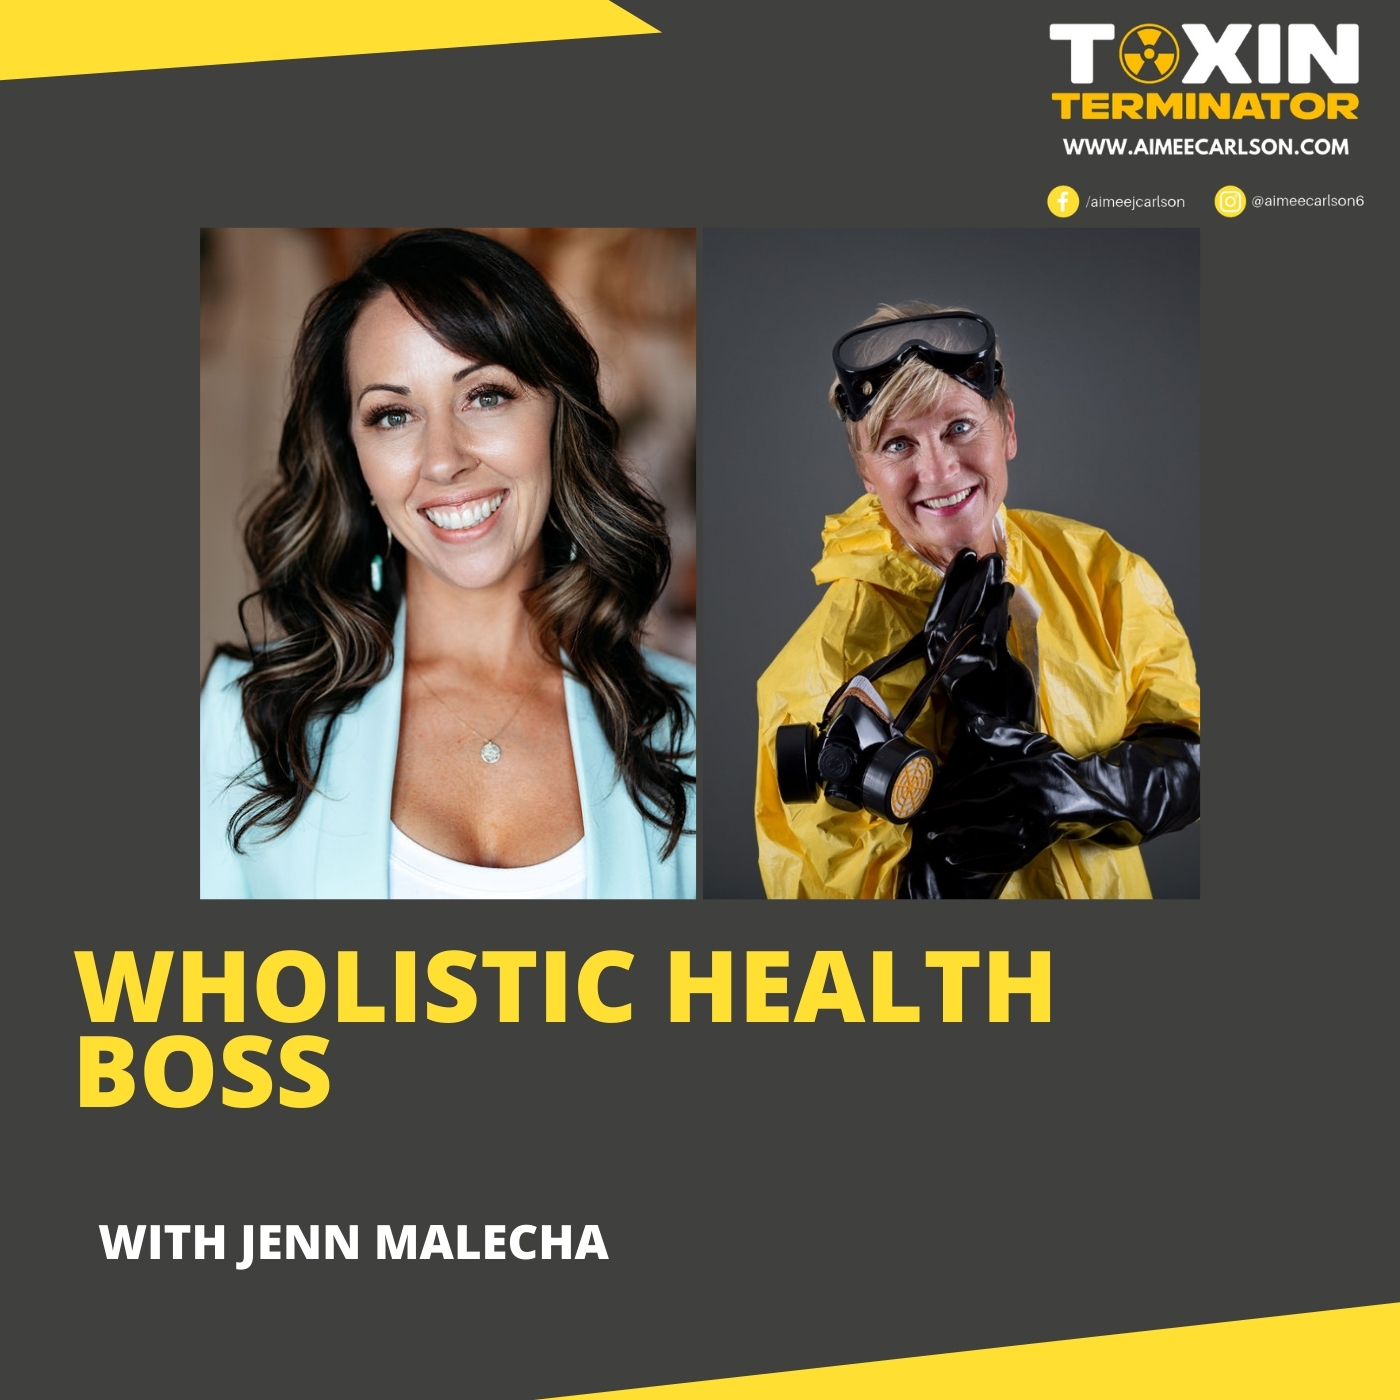 Wholistic Health Boss with Jenn Malecha